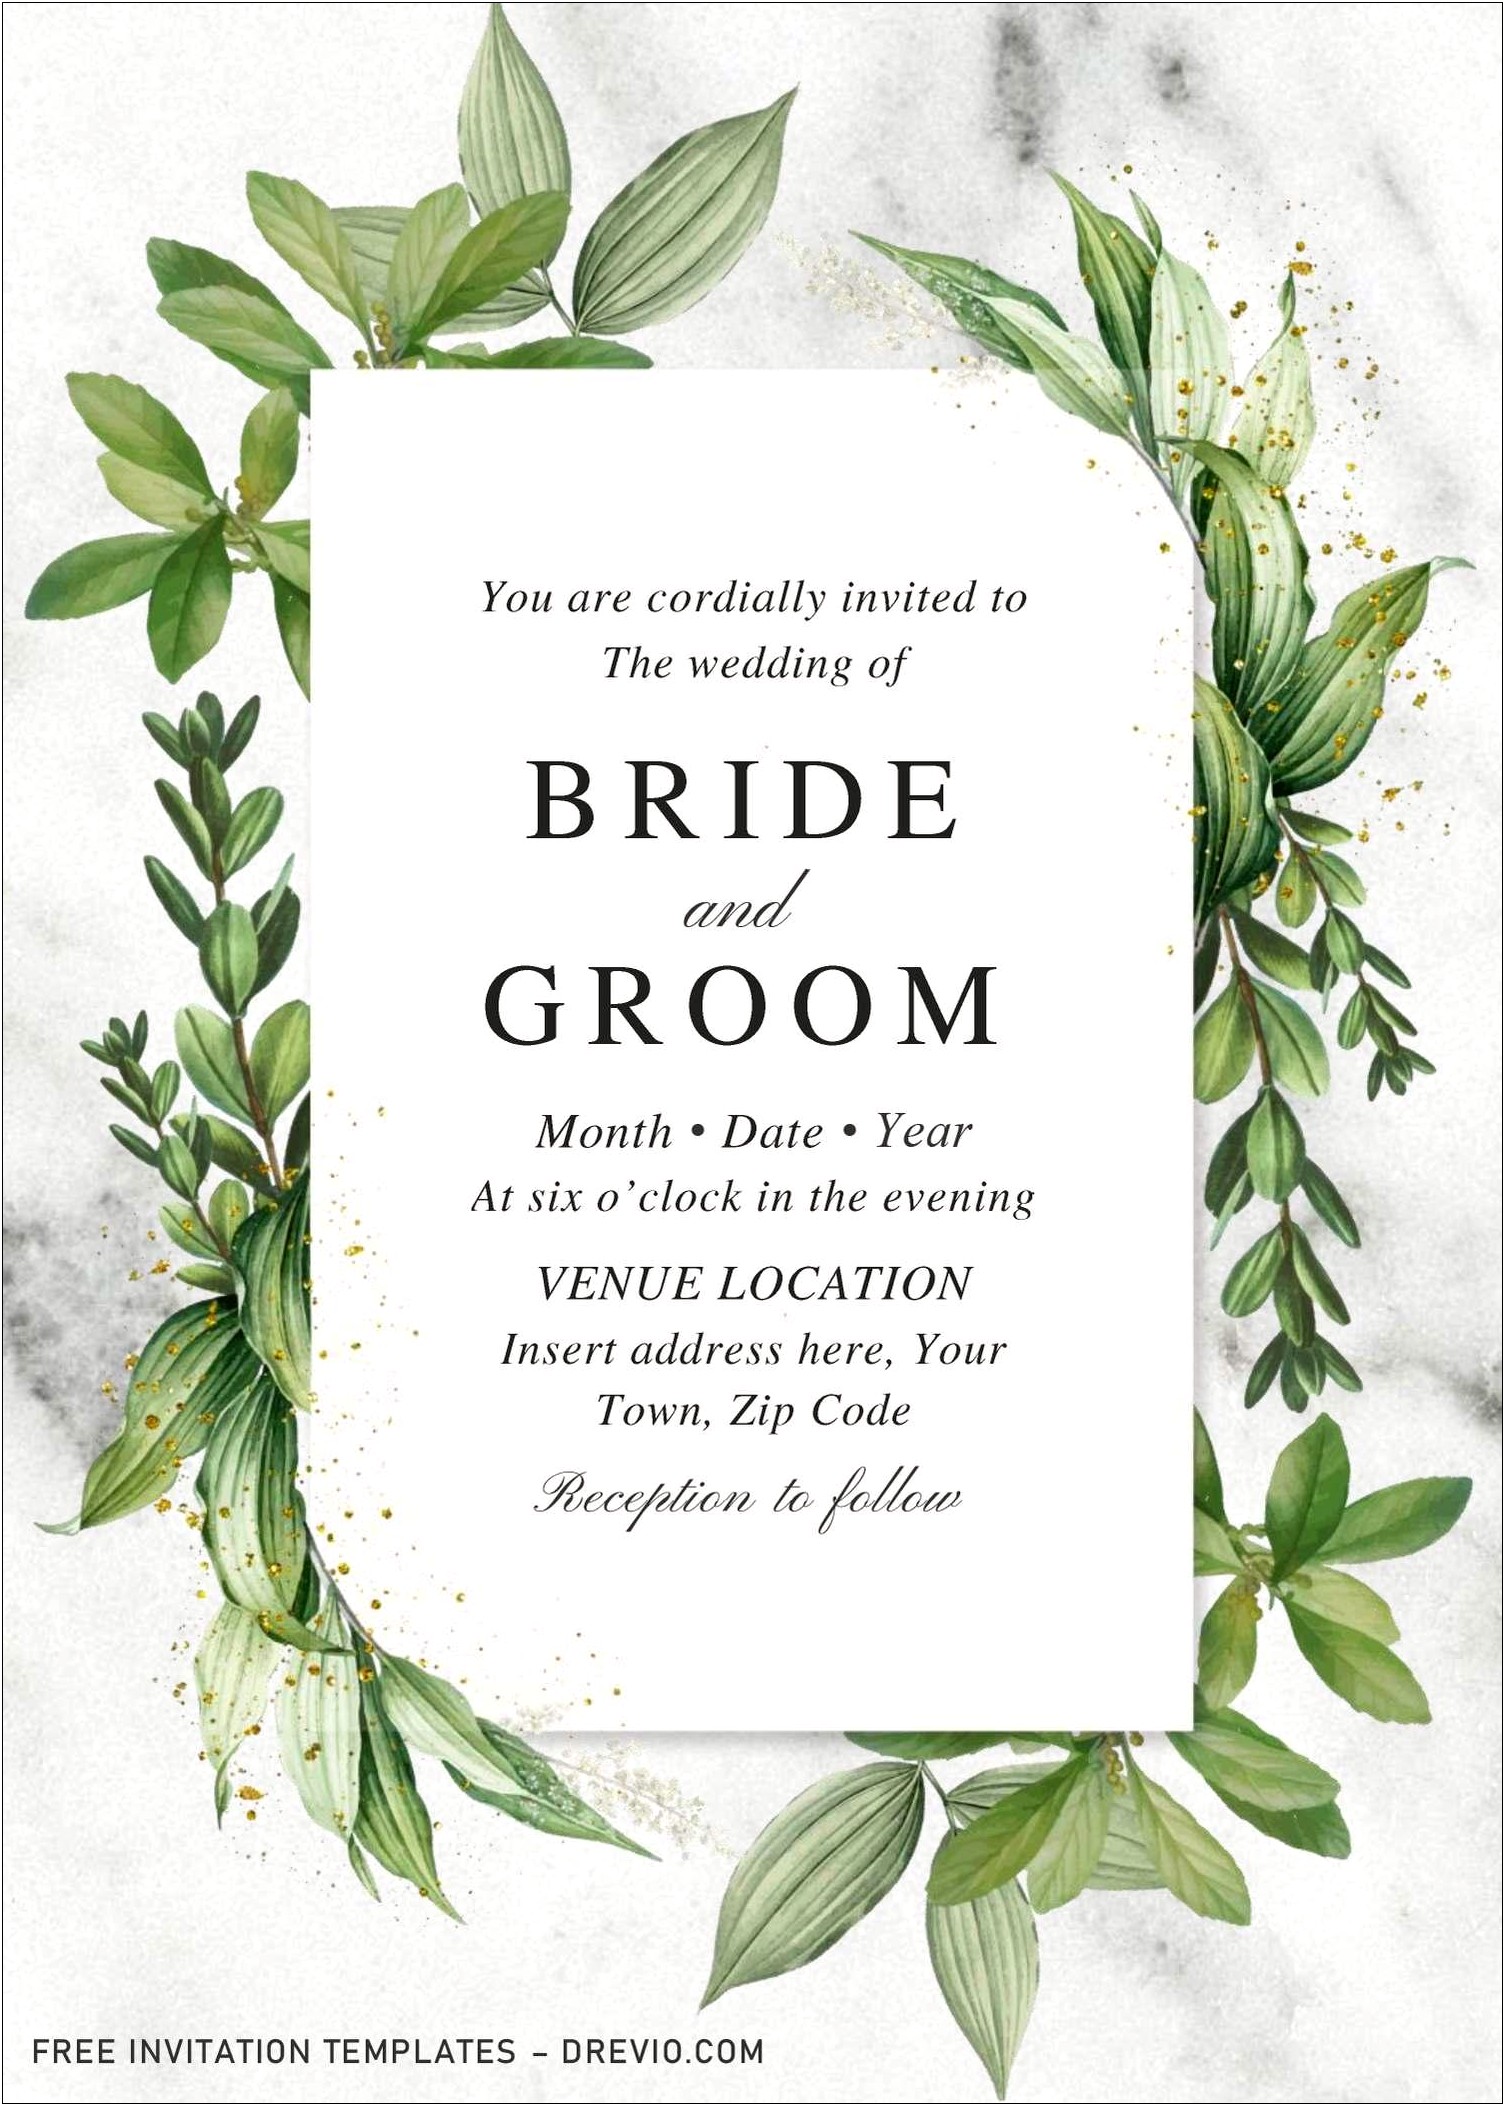 Free Blue And Green Wedding Invitation Templates